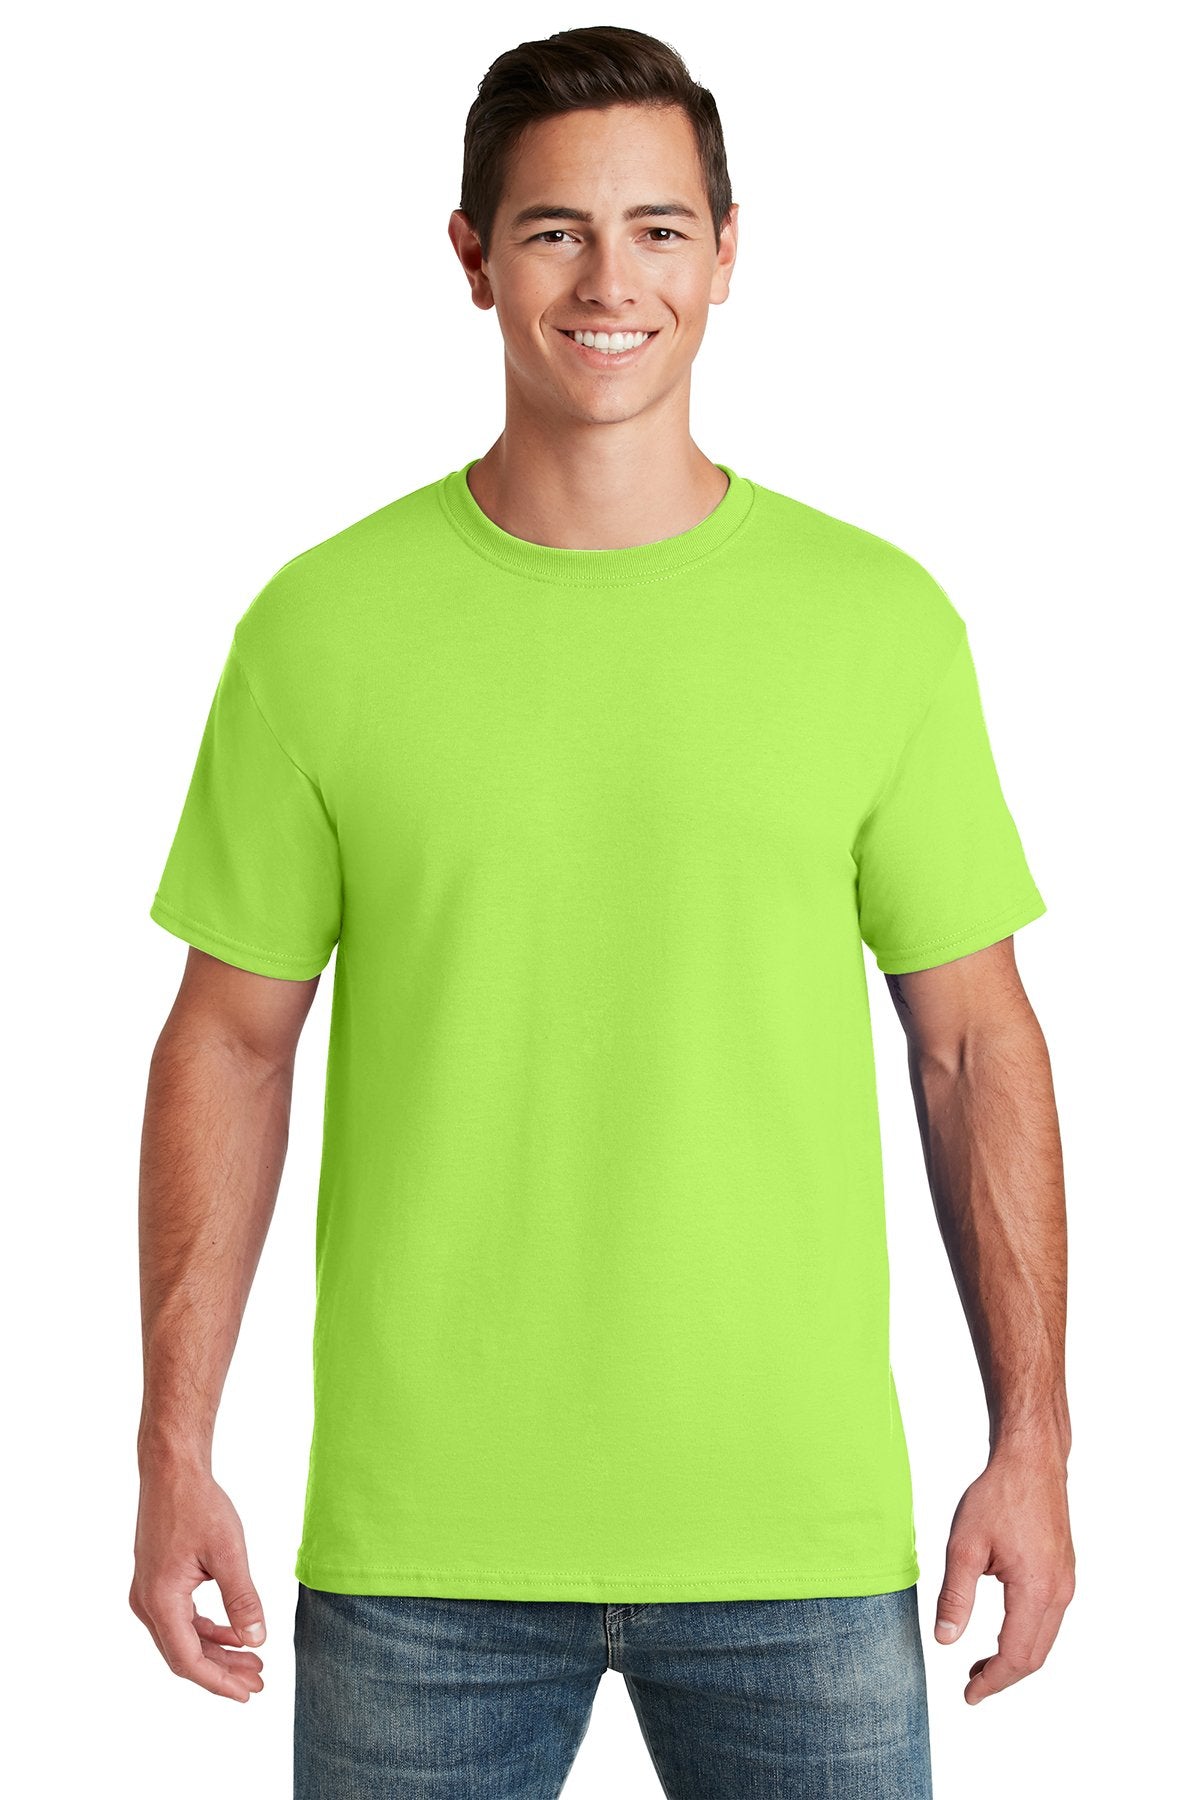 jerzees dri-power active 50/50 cotton/poly t-shirt 29m neon green